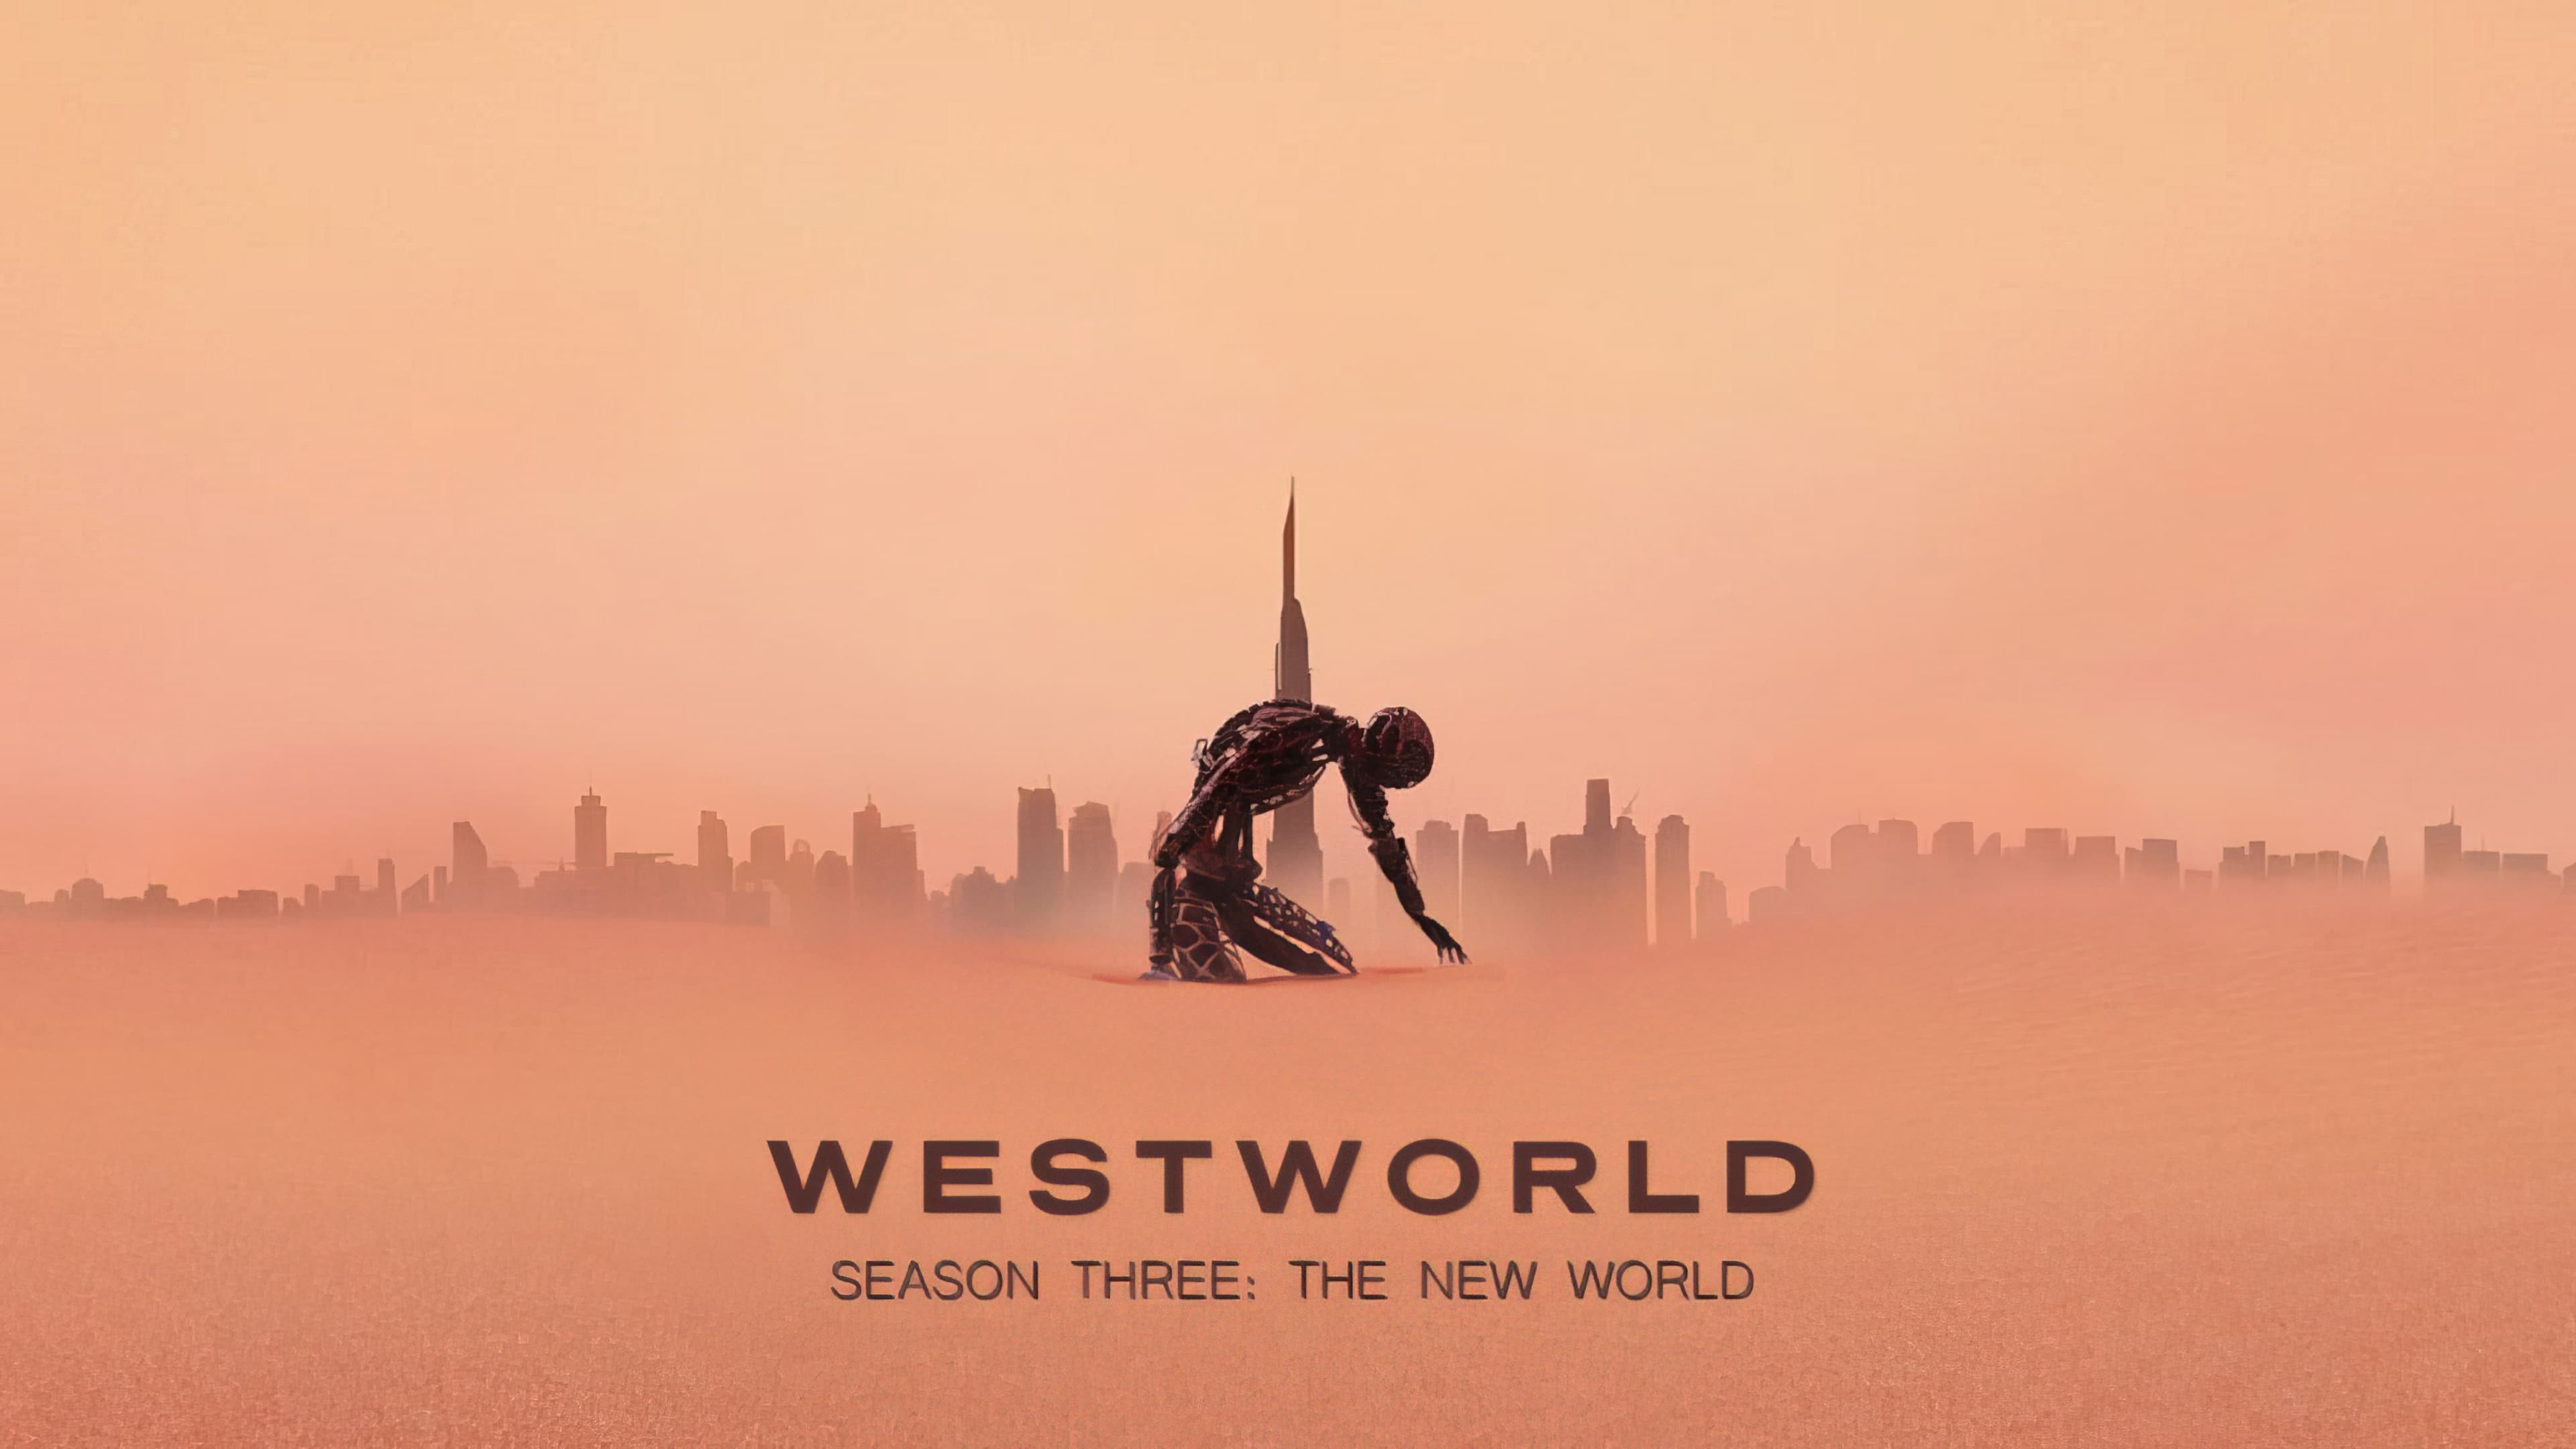 Westworld - Season 4 Episode 6